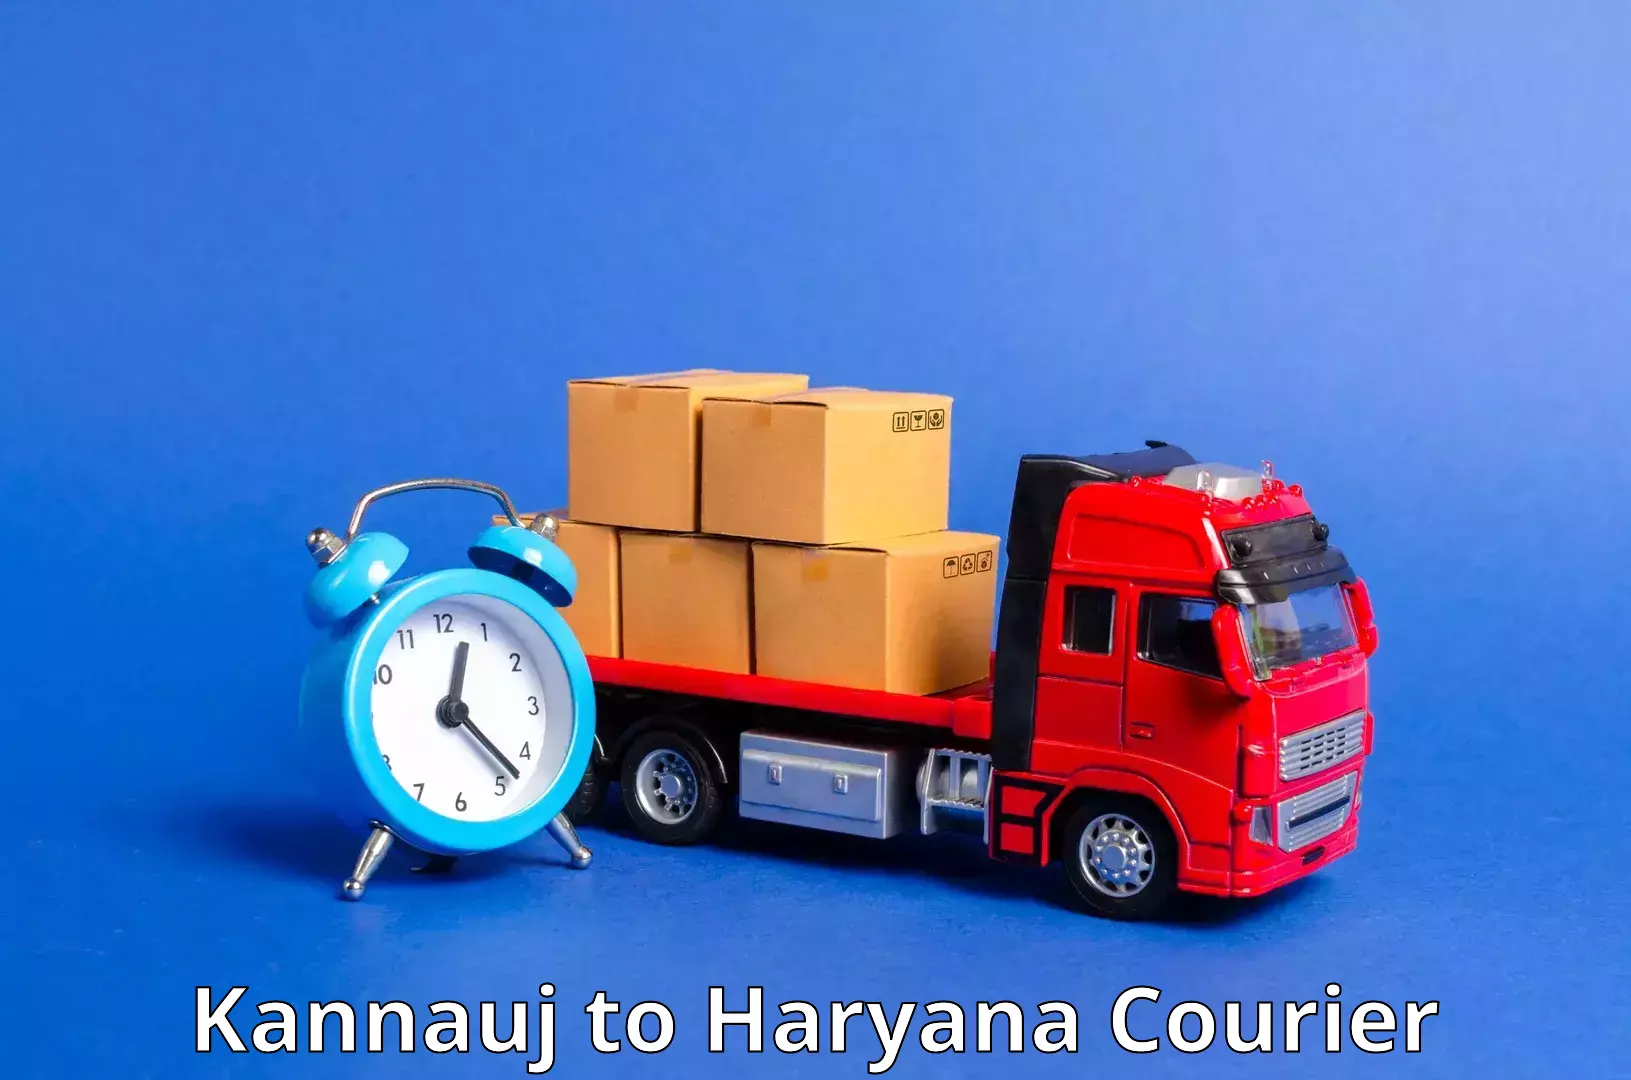 Express courier capabilities in Kannauj to Loharu